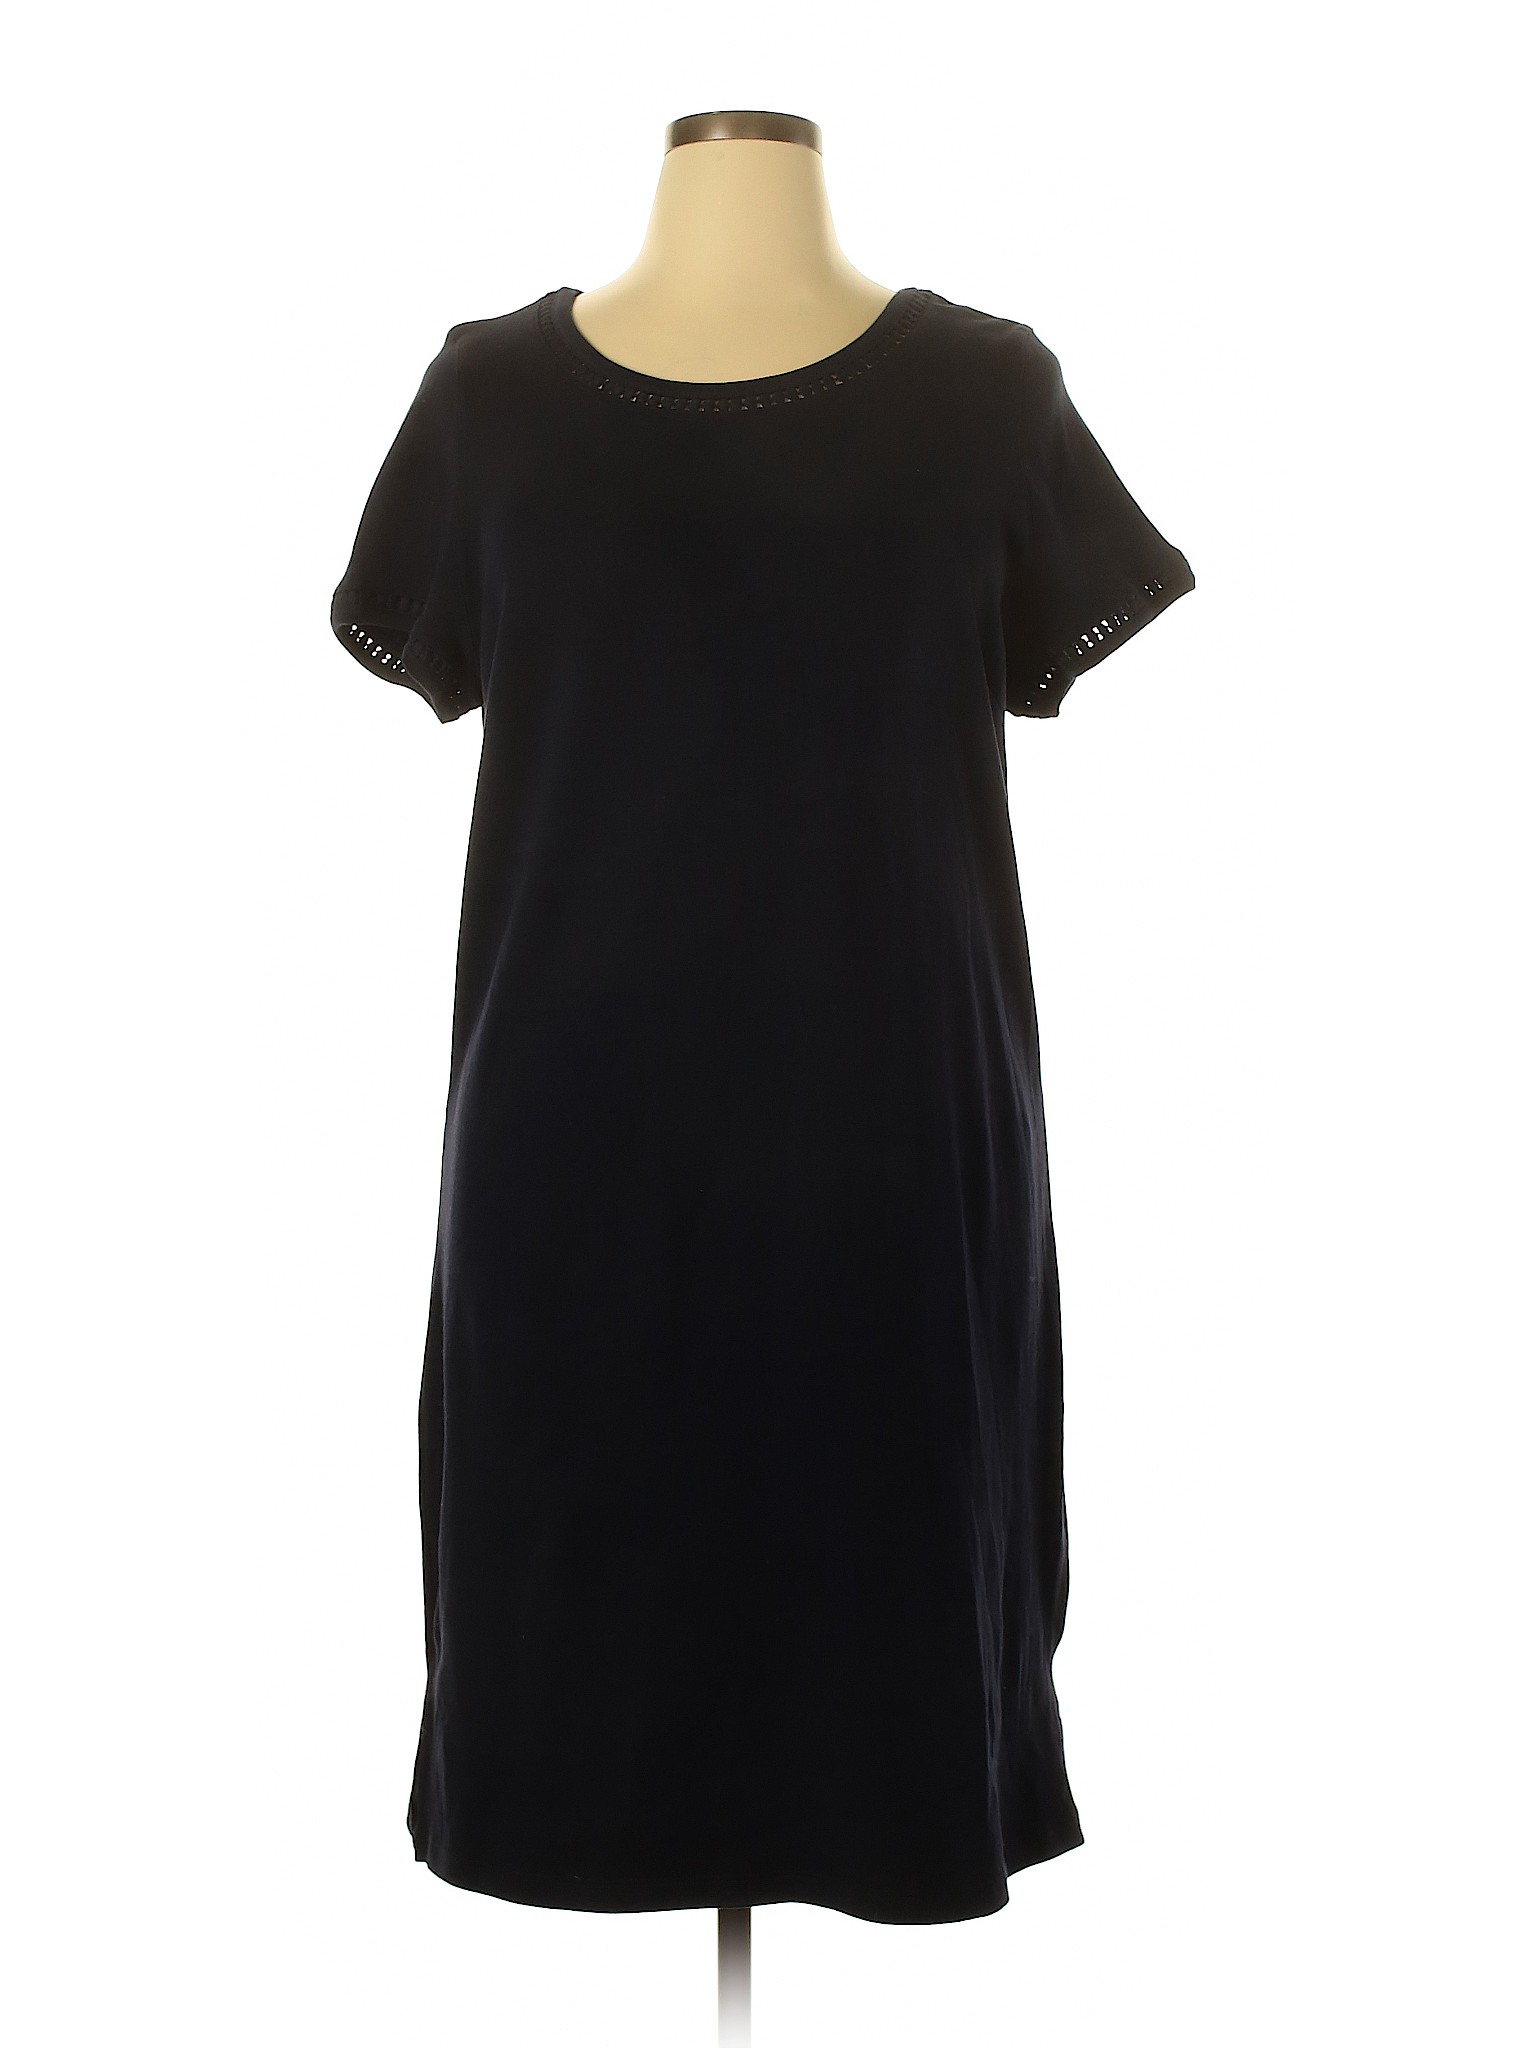 Talbots Outlet Women Black Casual Dress XL | eBay